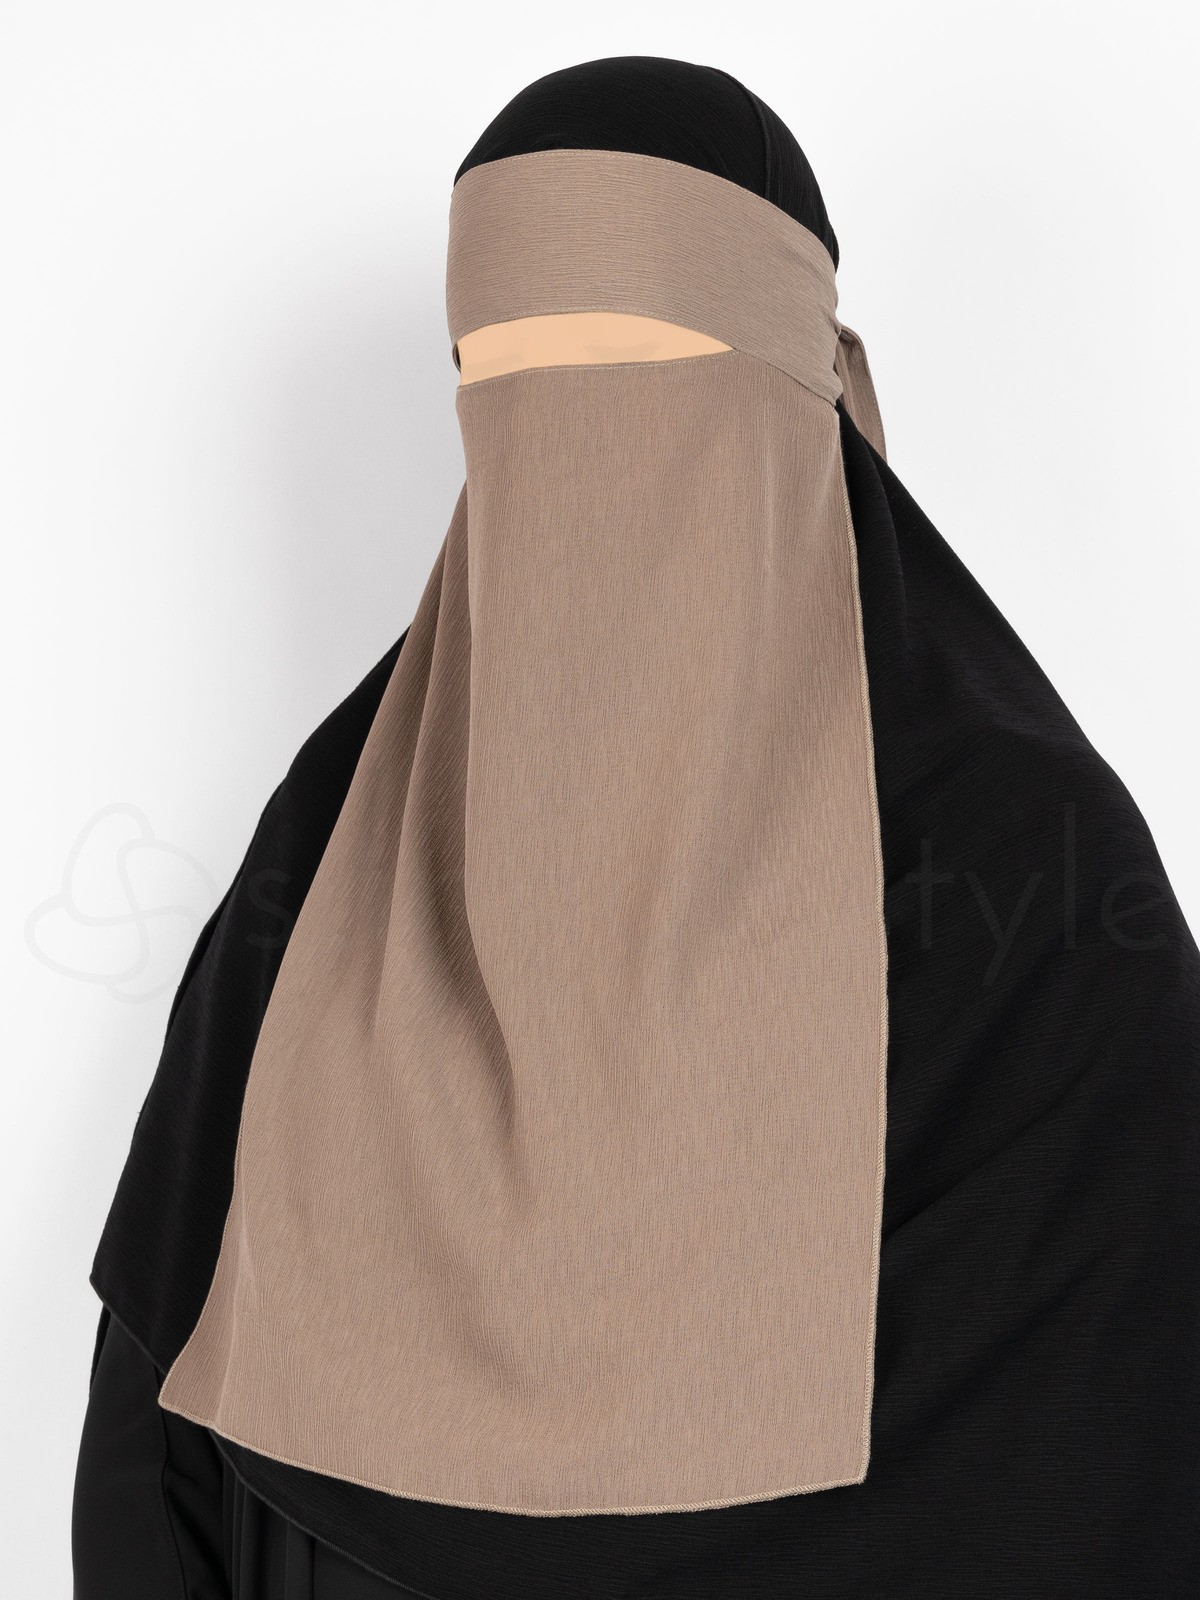 Sunnah Style - Brushed One Layer Niqab (Mocha)